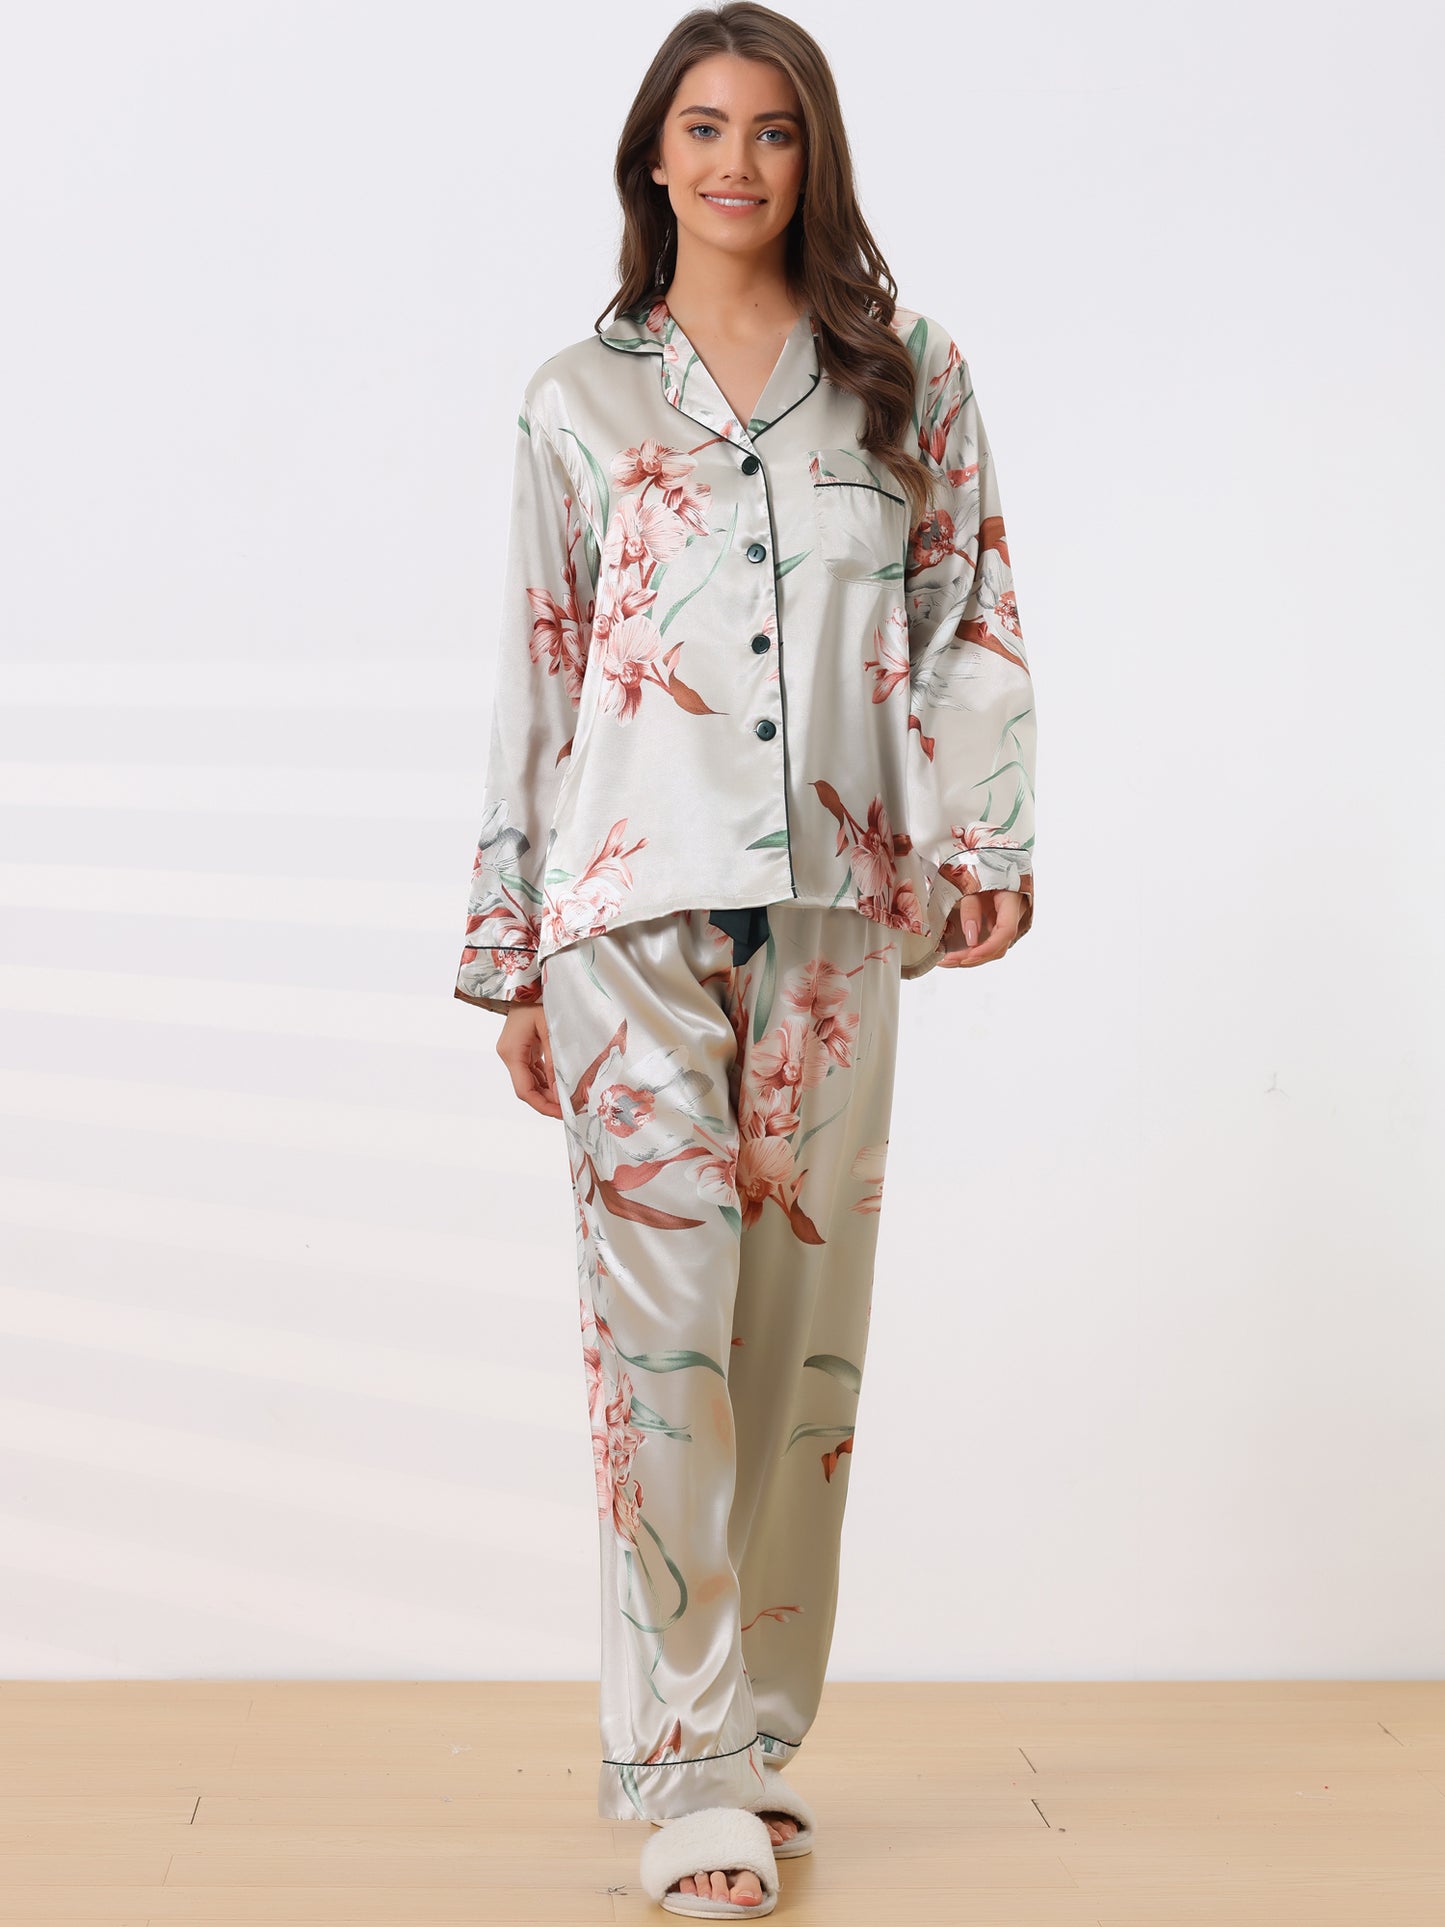 cheibear Pajama Sleep Shirt Nightwear Sleepwear Lounge Satin Pj Sets Gray